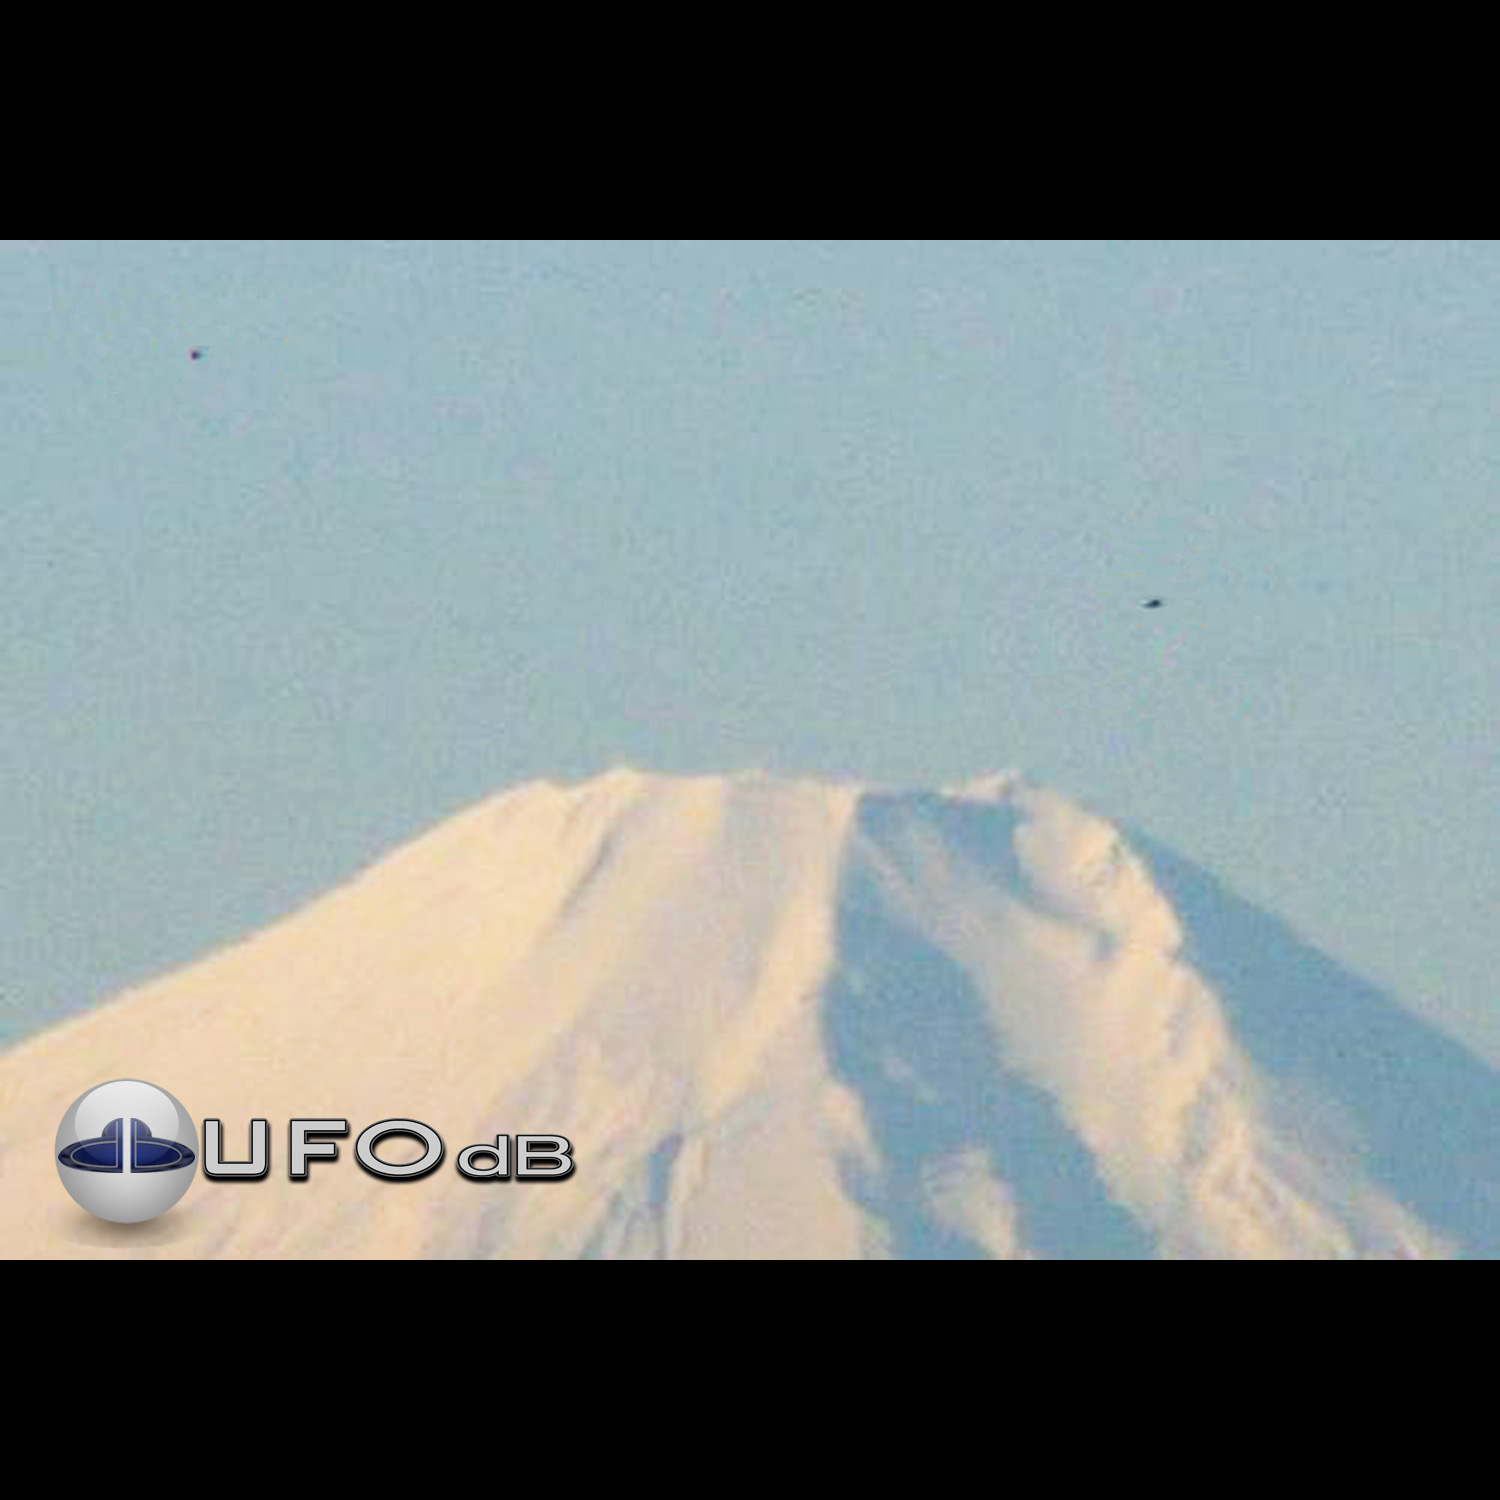 Fleet of UFOs over Mount Fuji worries Asia | Japan | February 2011 UFO Picture #220-1